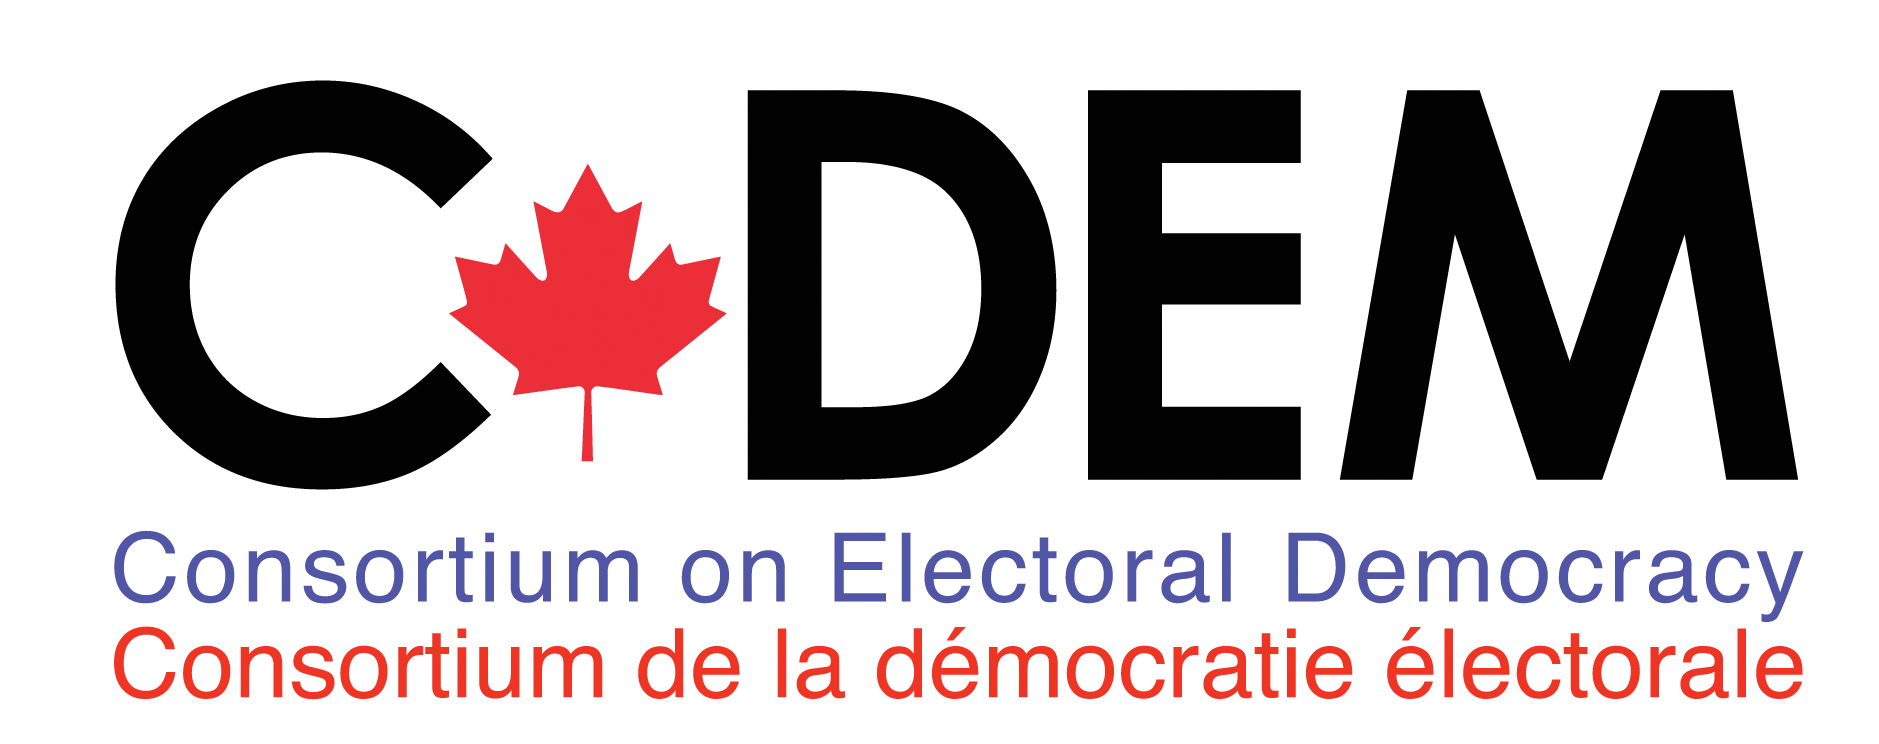 Consortium on Electoral Democracy (C-Dem) Collections.